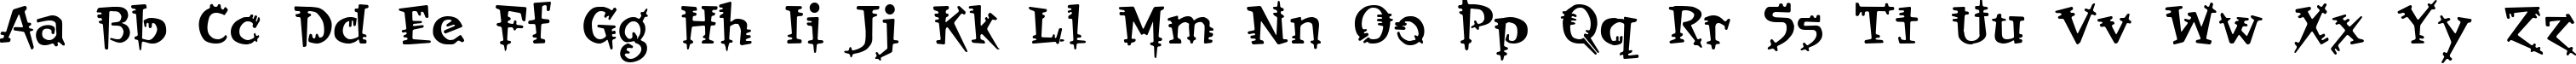 Пример написания английского алфавита шрифтом Orbus Multiserif